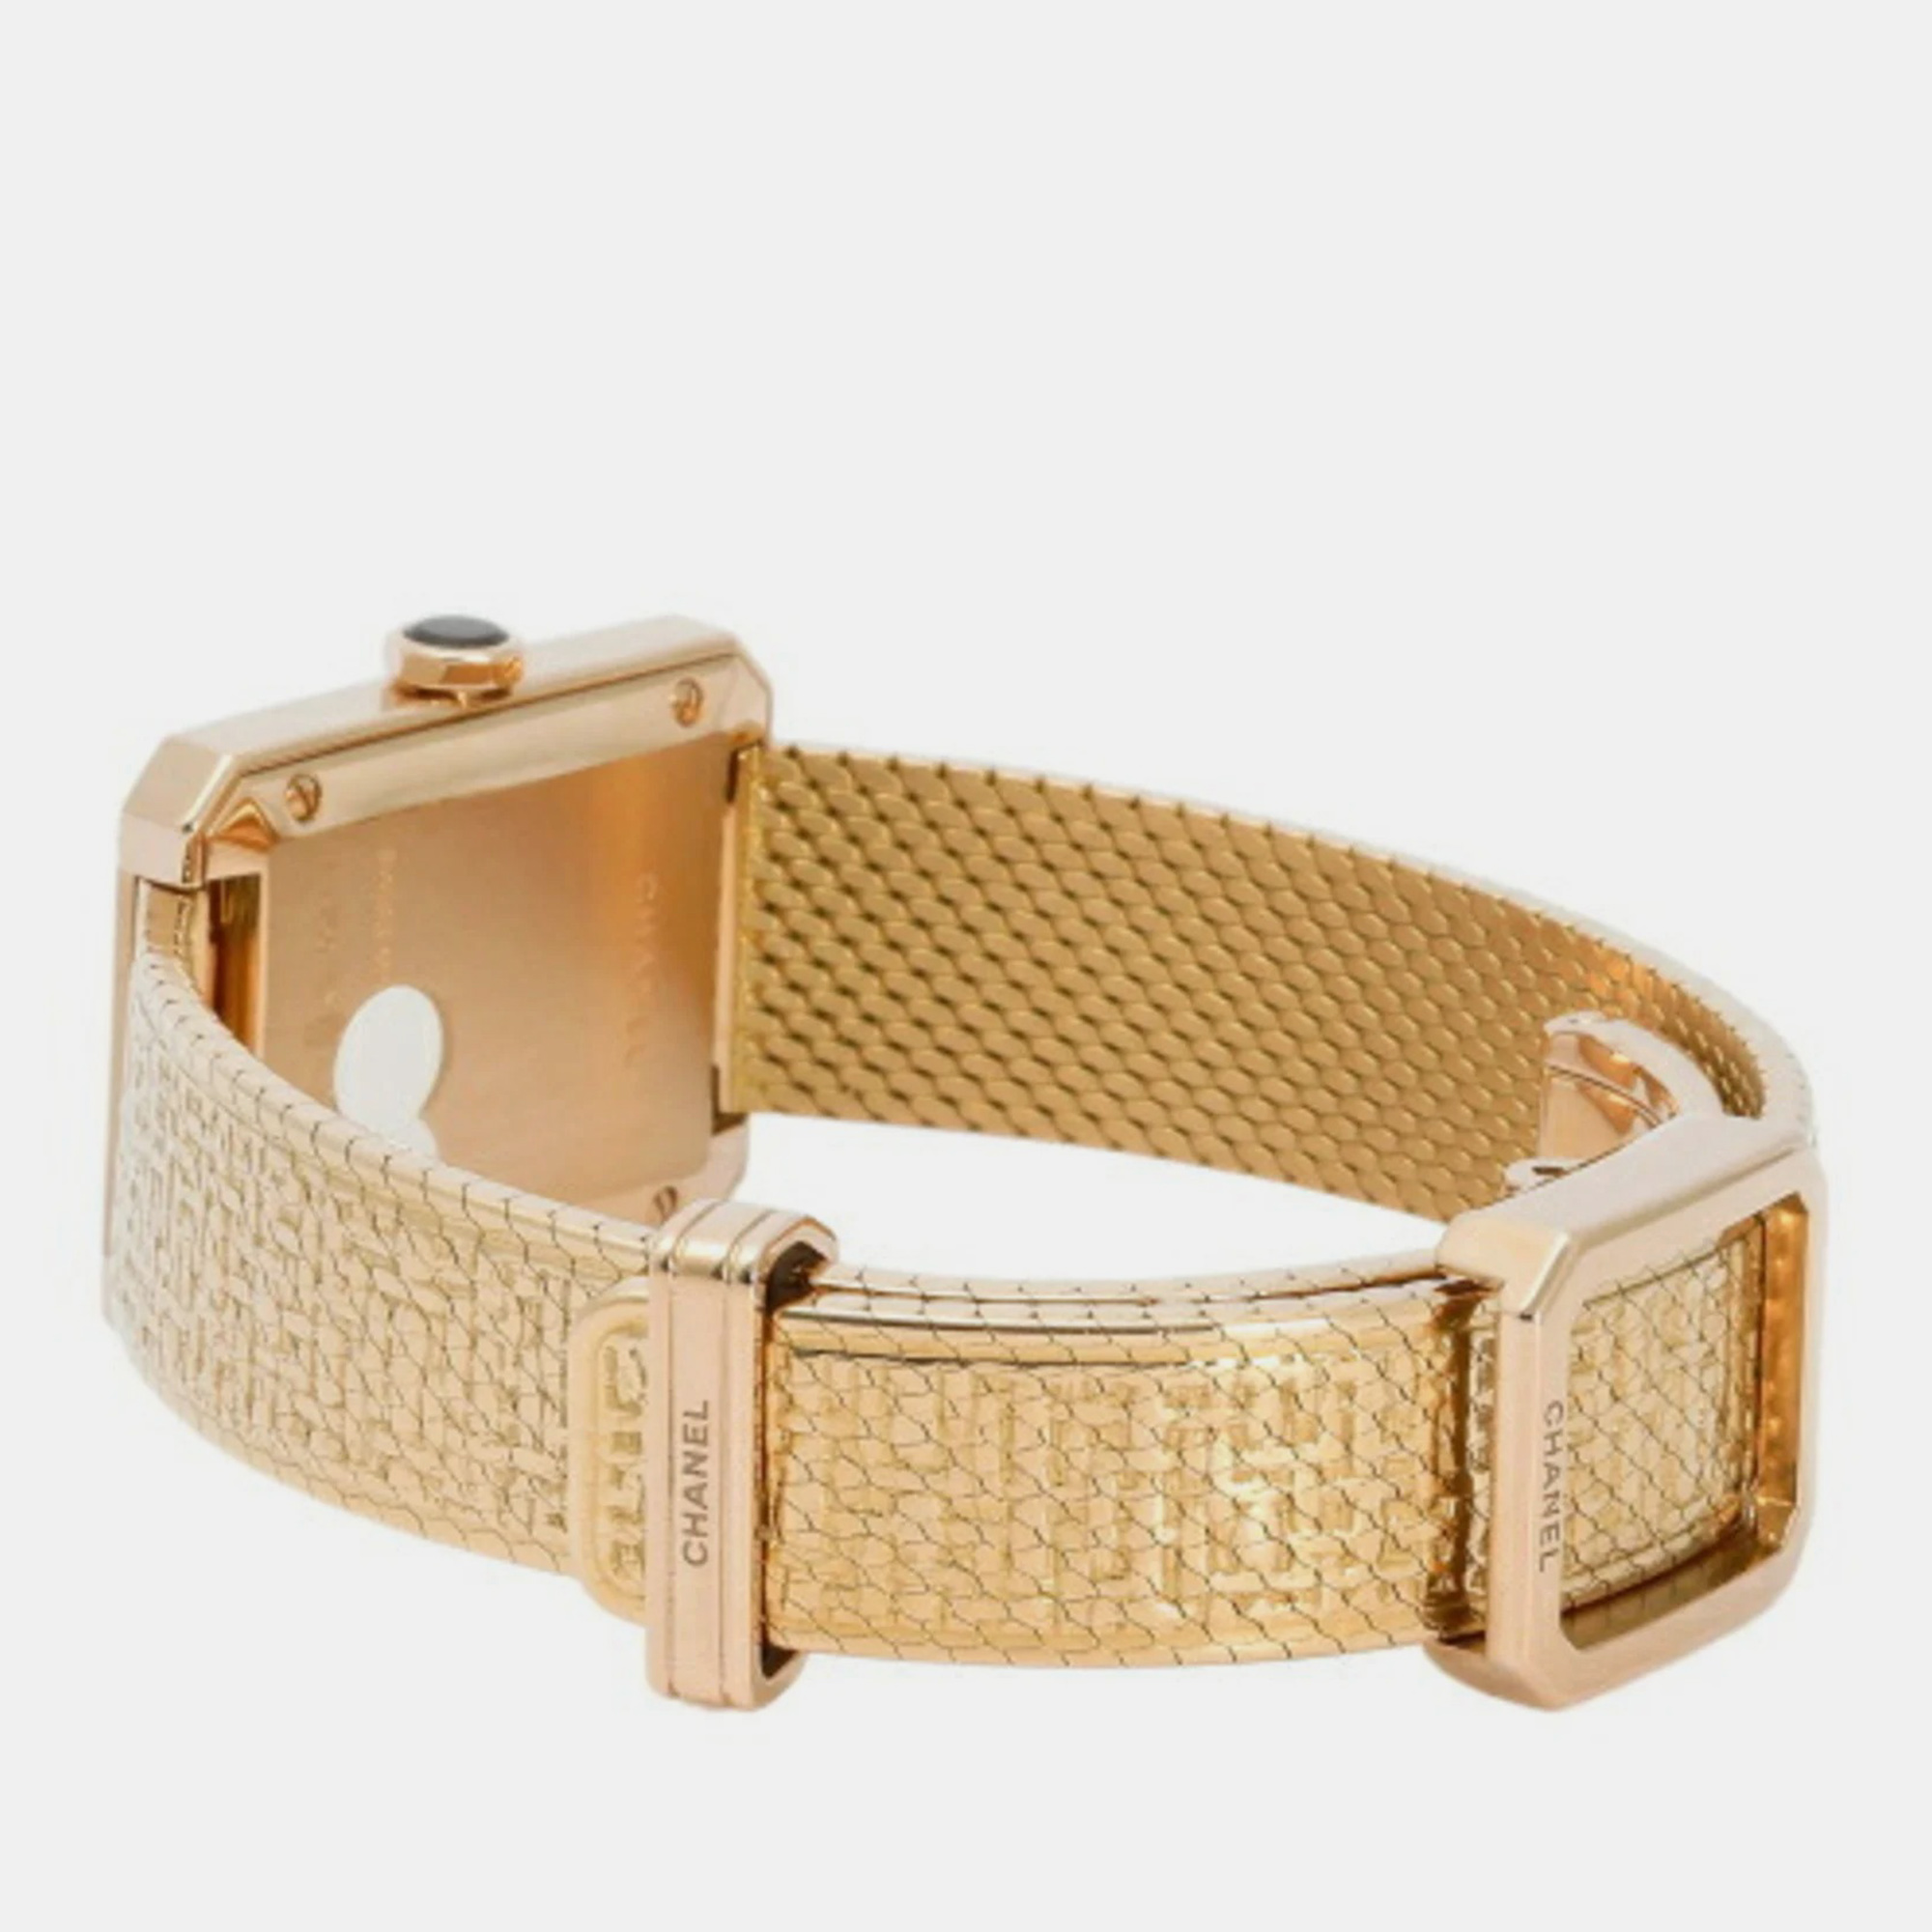 Chanel Silver 18k Rose Gold Boy-Friend H4881 Quartz Women's Wristwatch 21.5 Mm